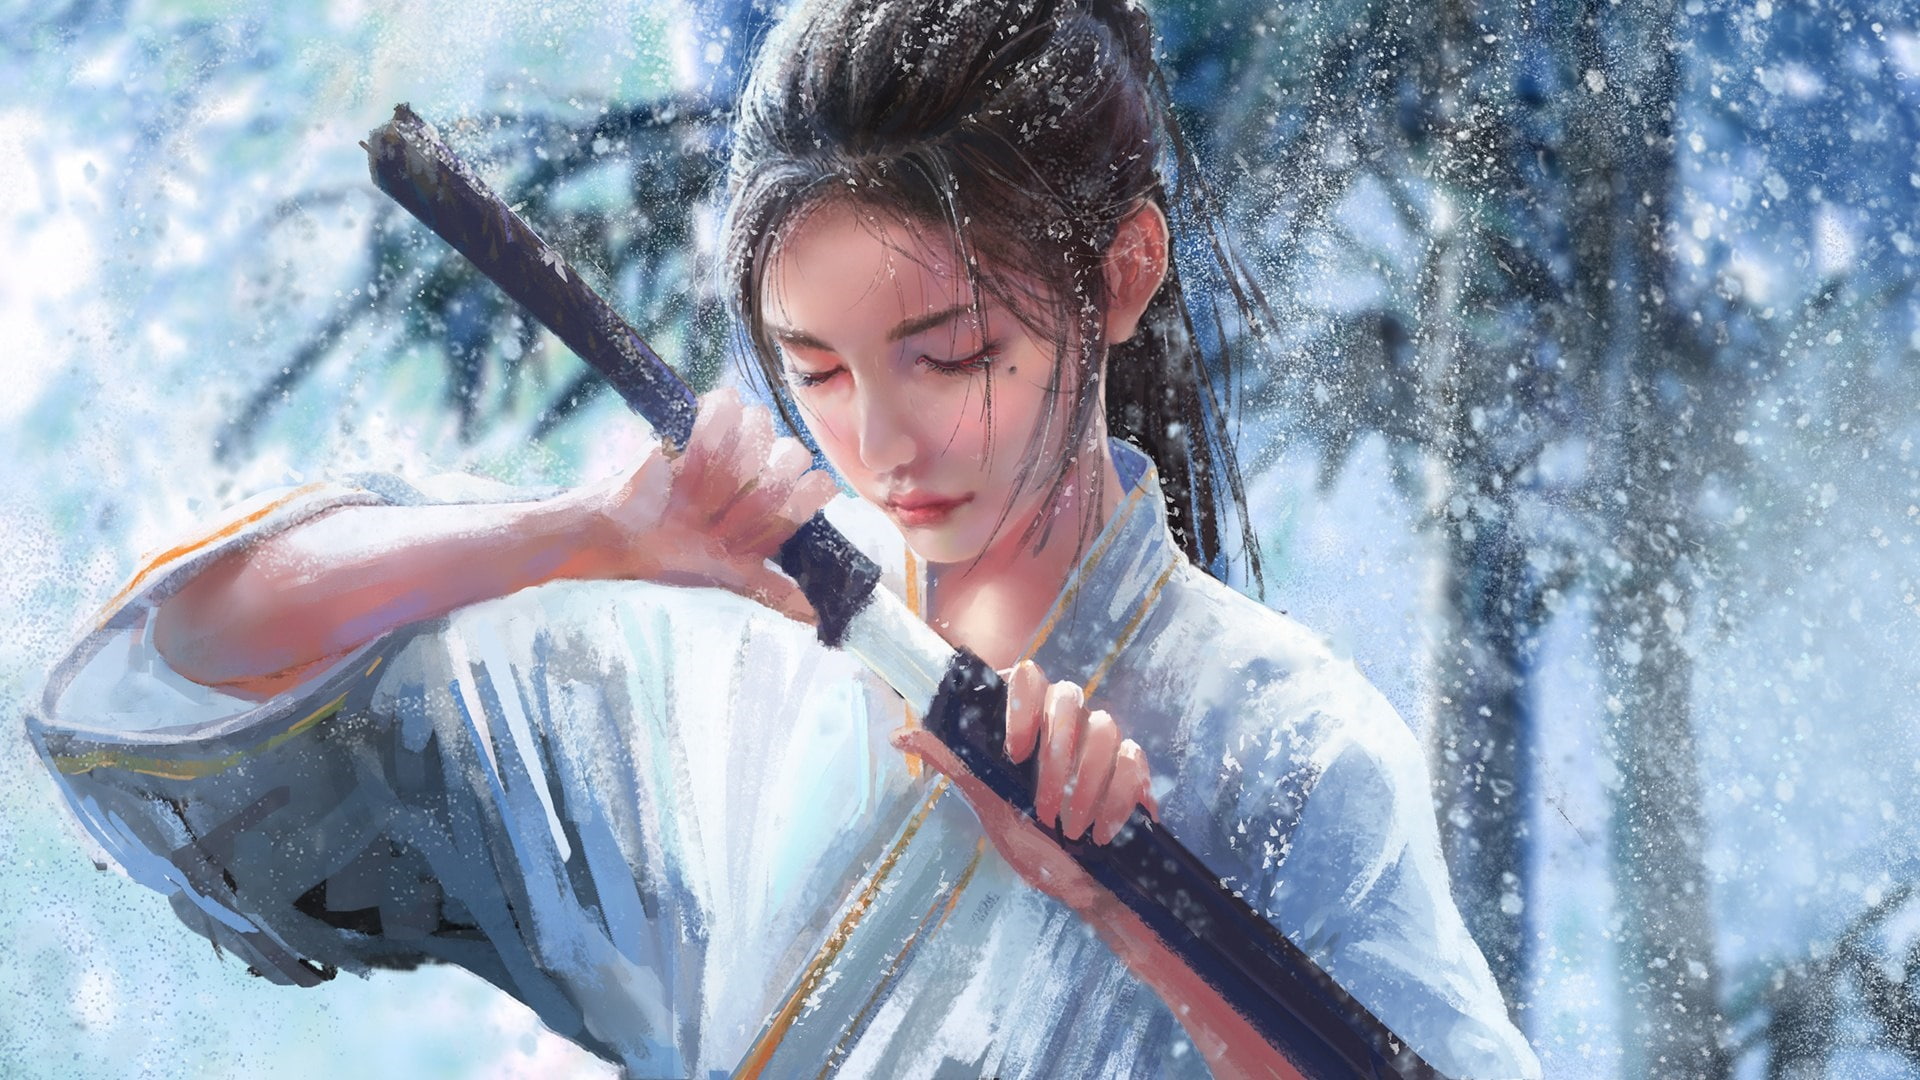 japanese women, illustration, sword, girl, woman, snow, katana